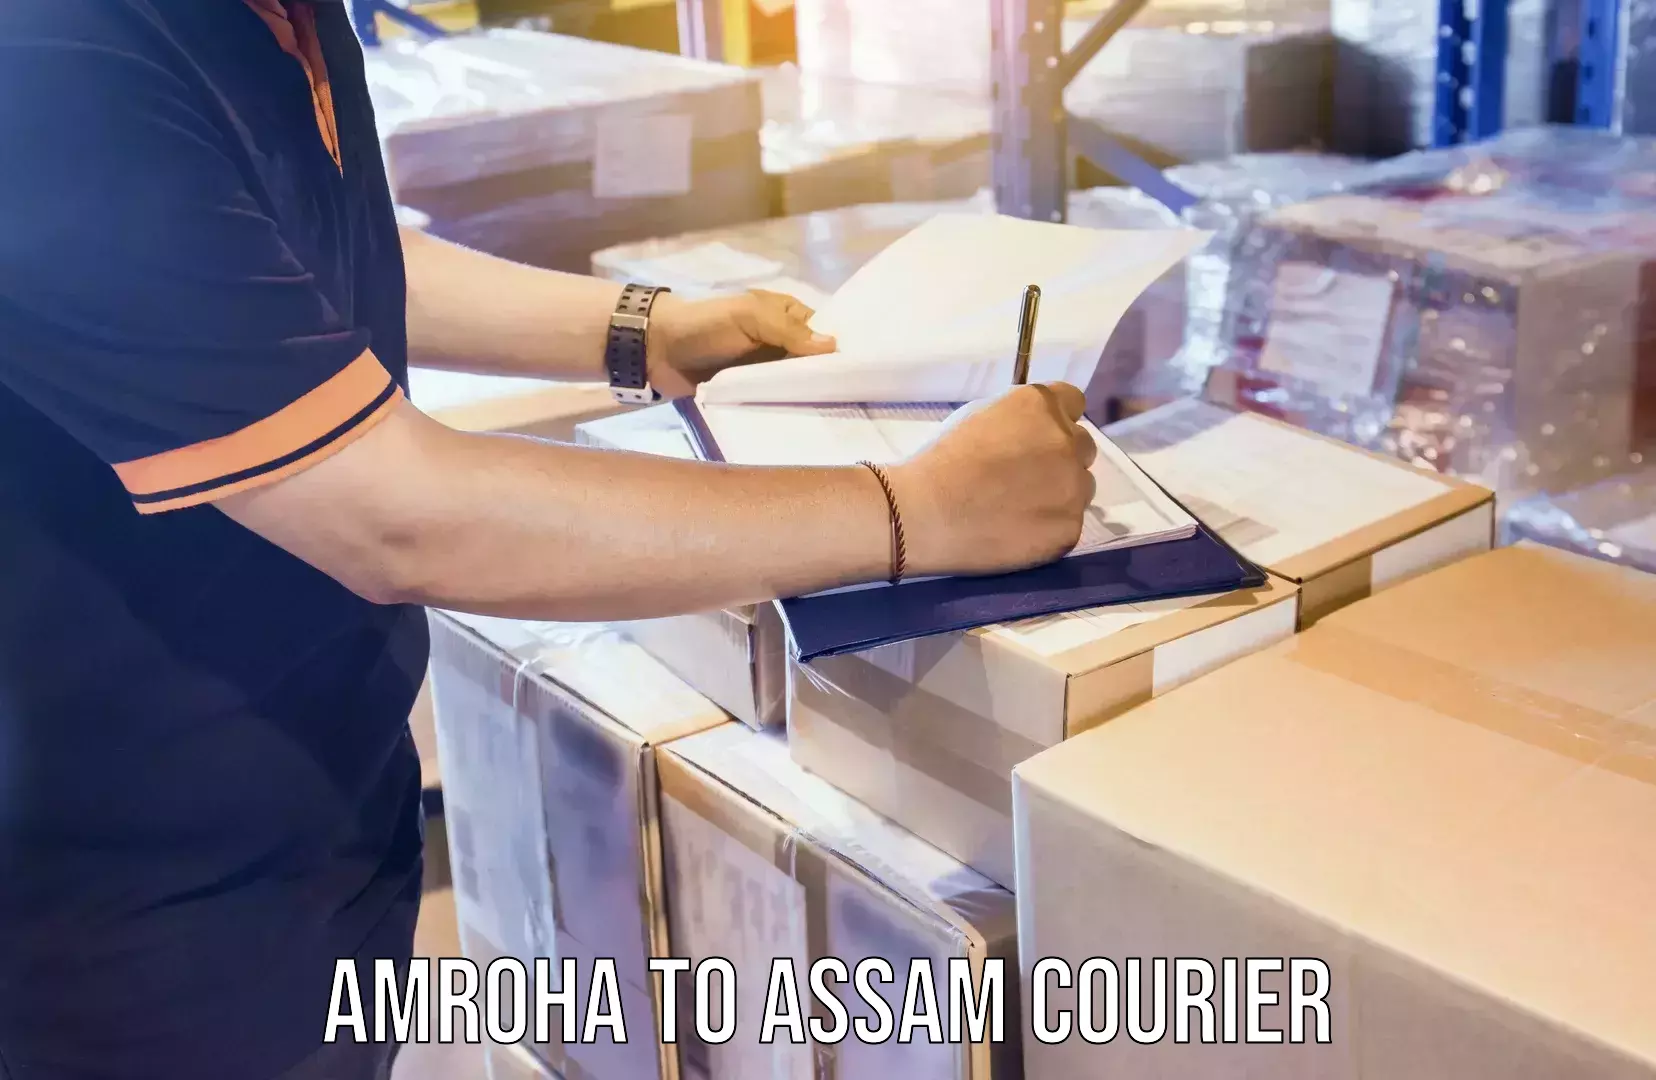 Courier service partnerships Amroha to Assam